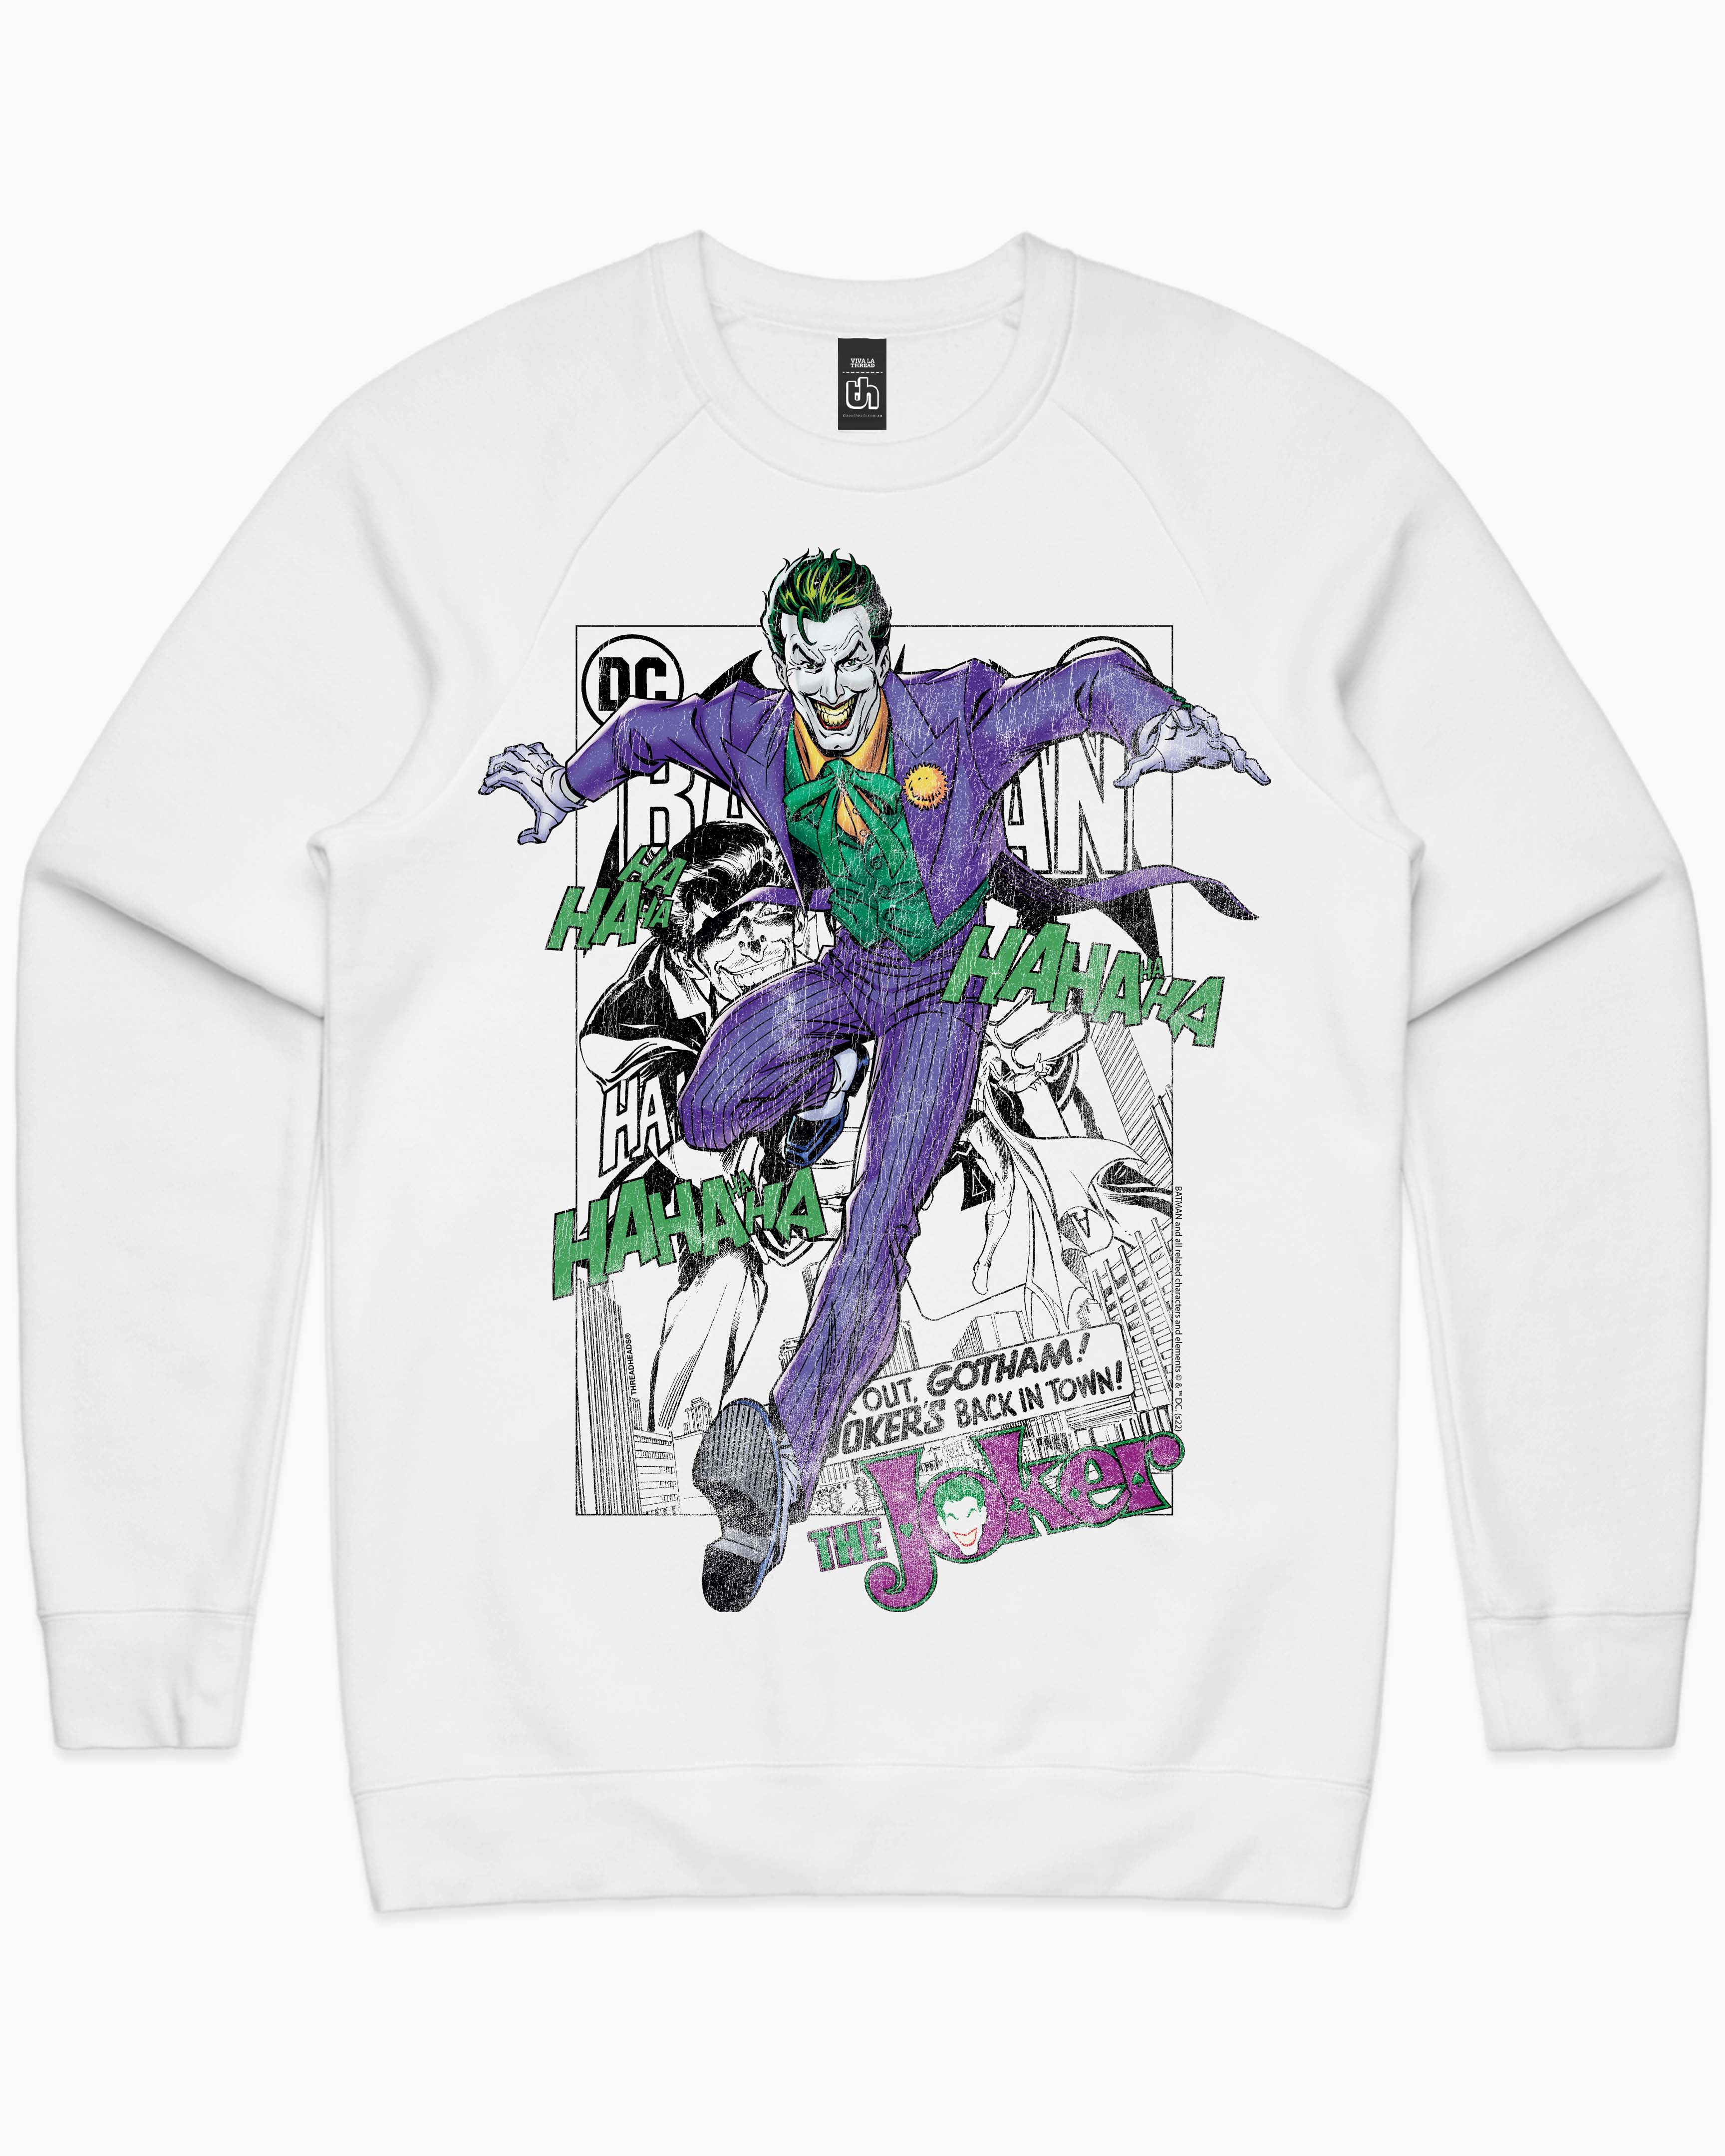 The Joker Jumper